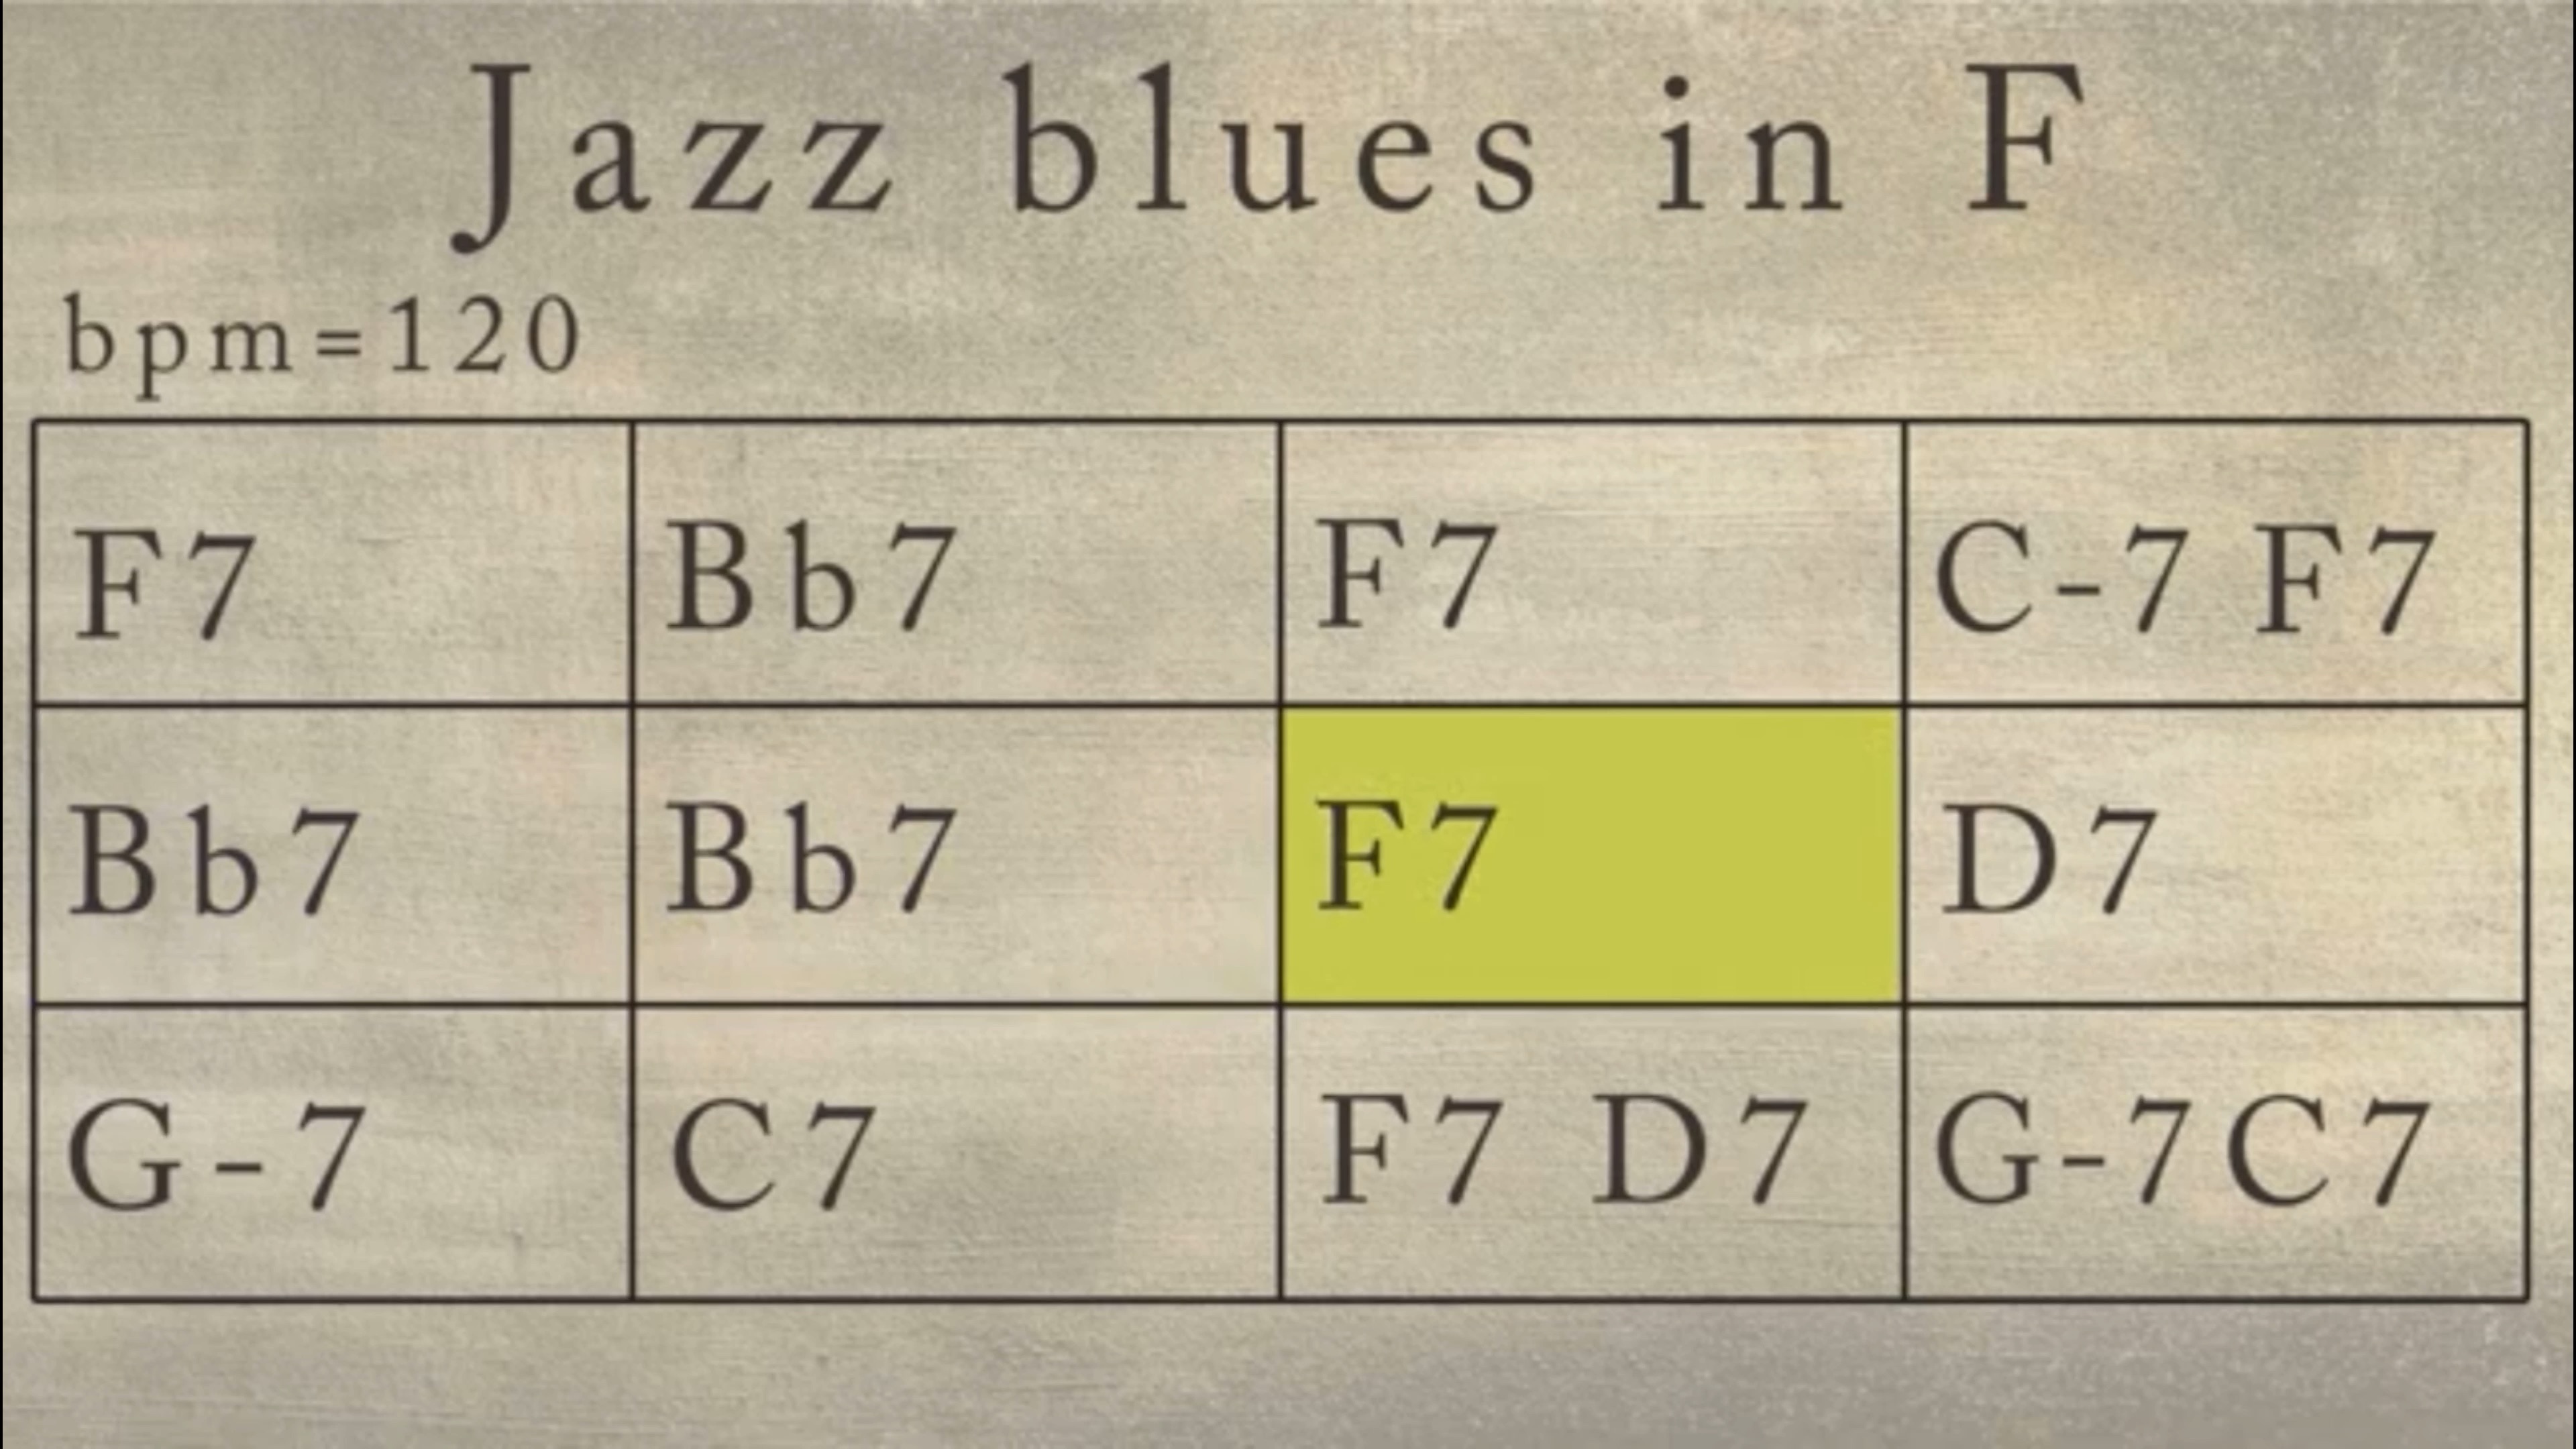 【爵士贝斯】JAZZ BLUES BACKING TRACK IN FA (无贝斯原声) 120 bpm